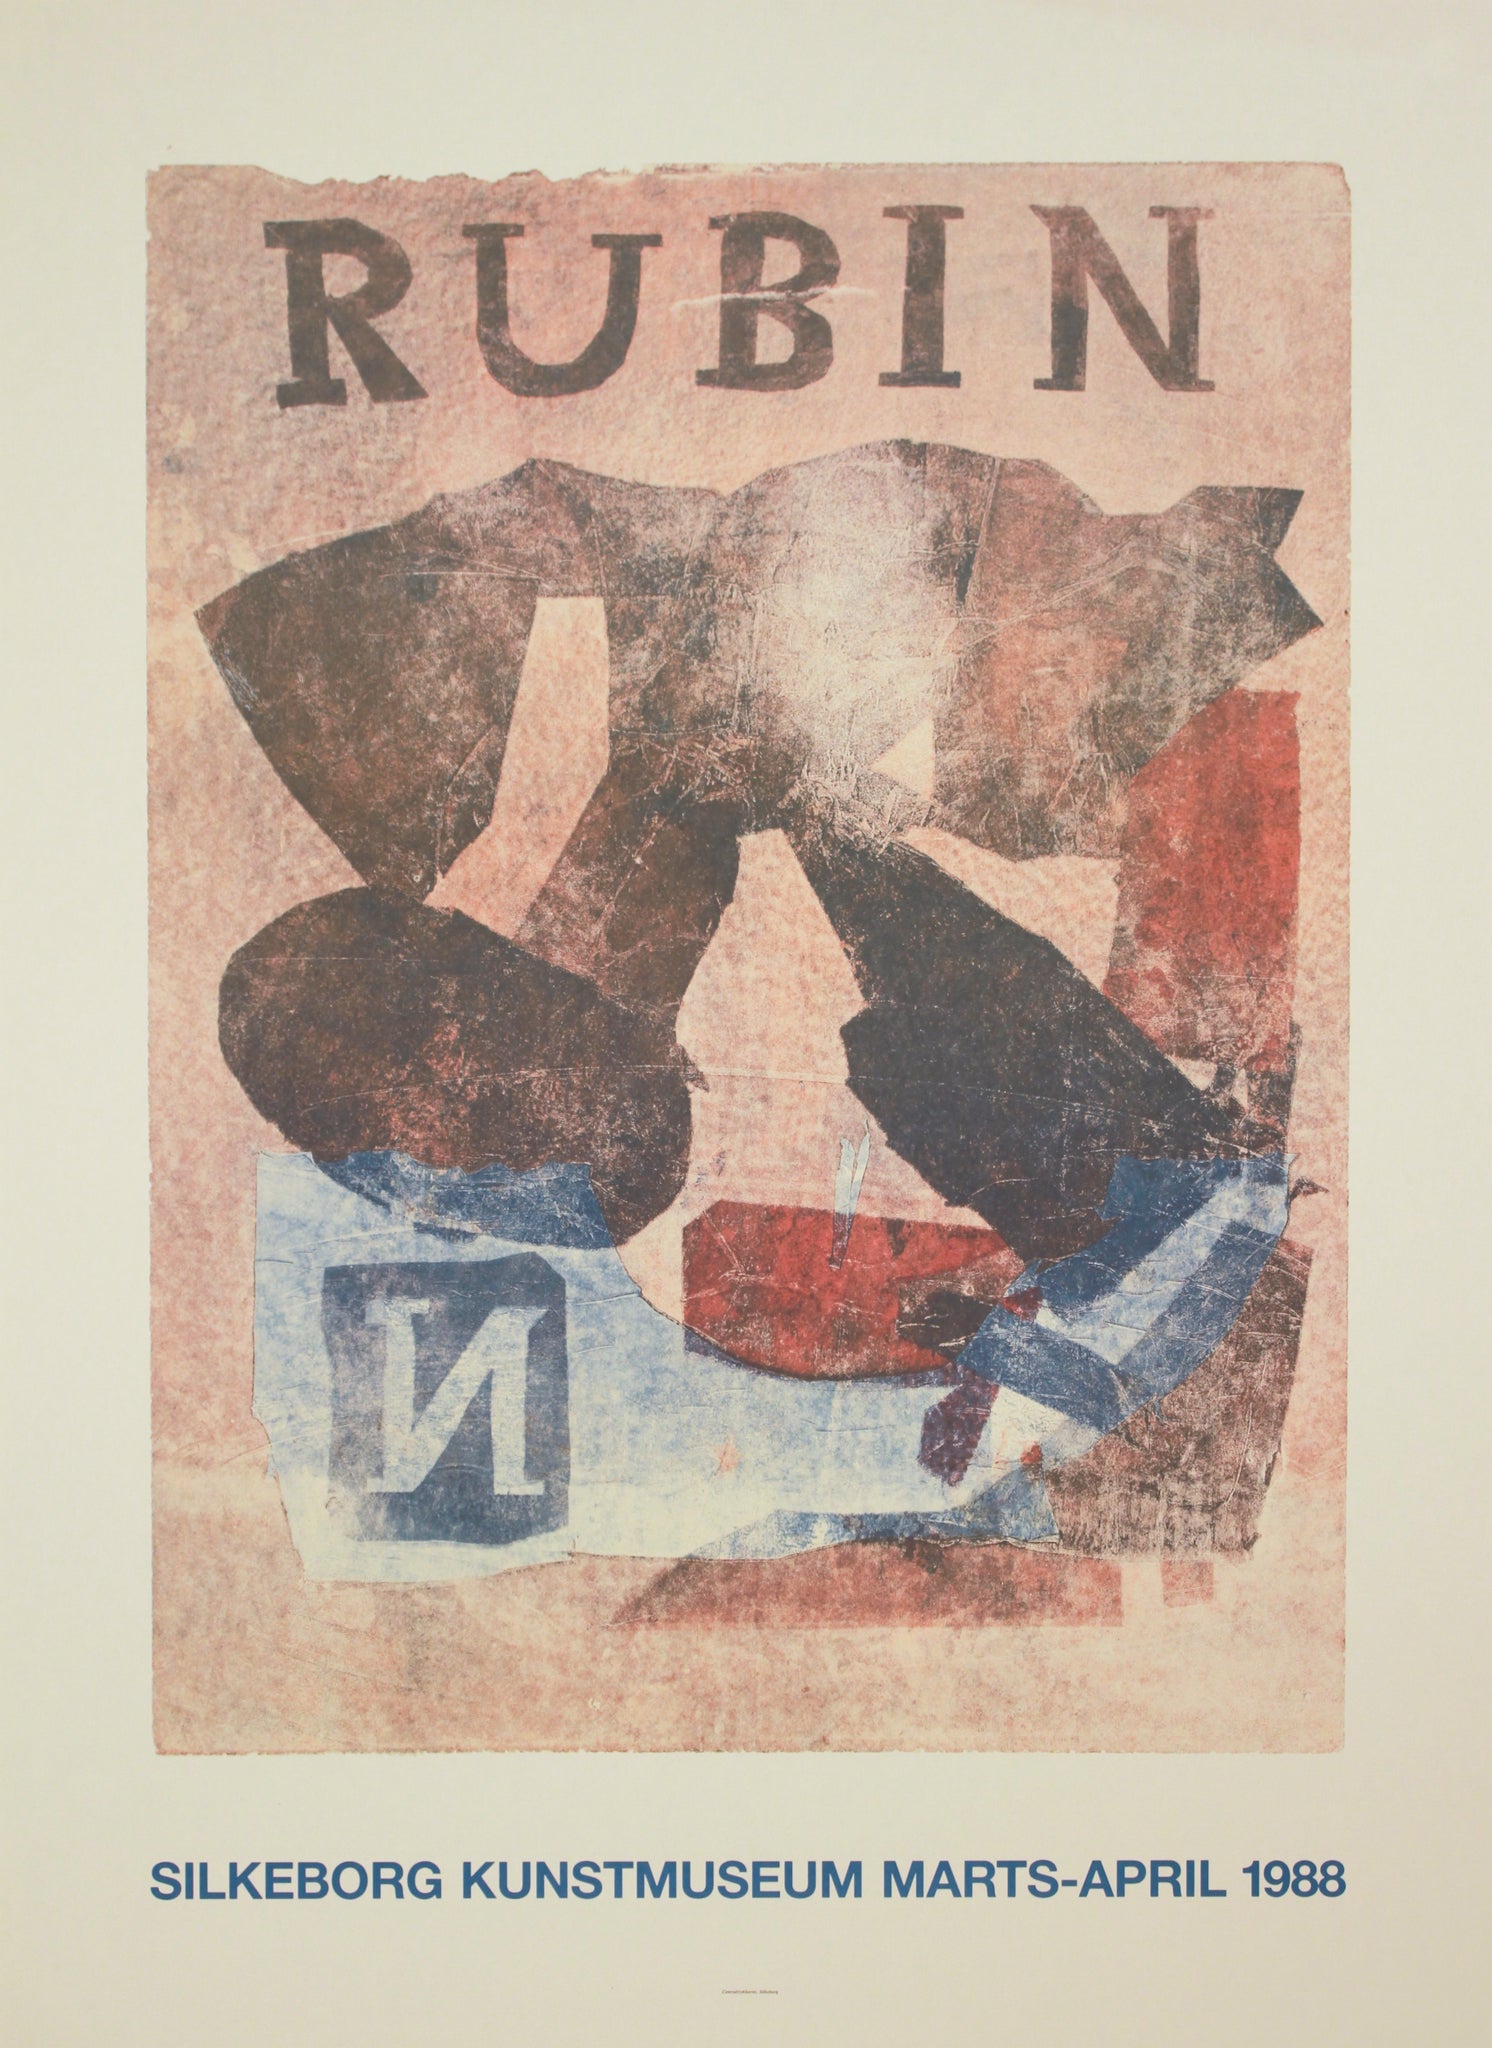 Rubin, Tryk collage (1988)